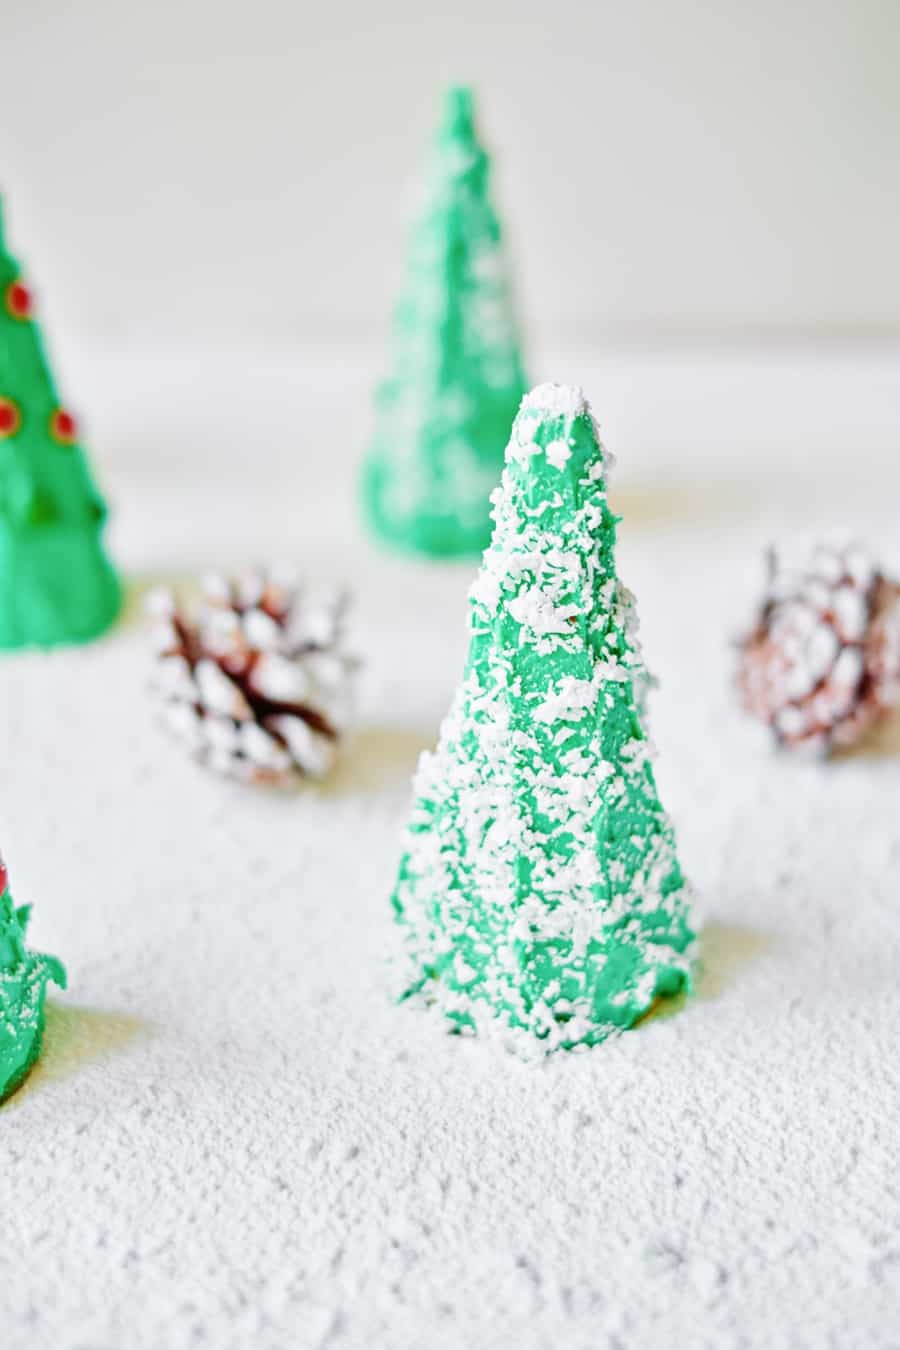 Ice Cream Cone Christmas Trees 0- Cute Christmas Treat for Kids